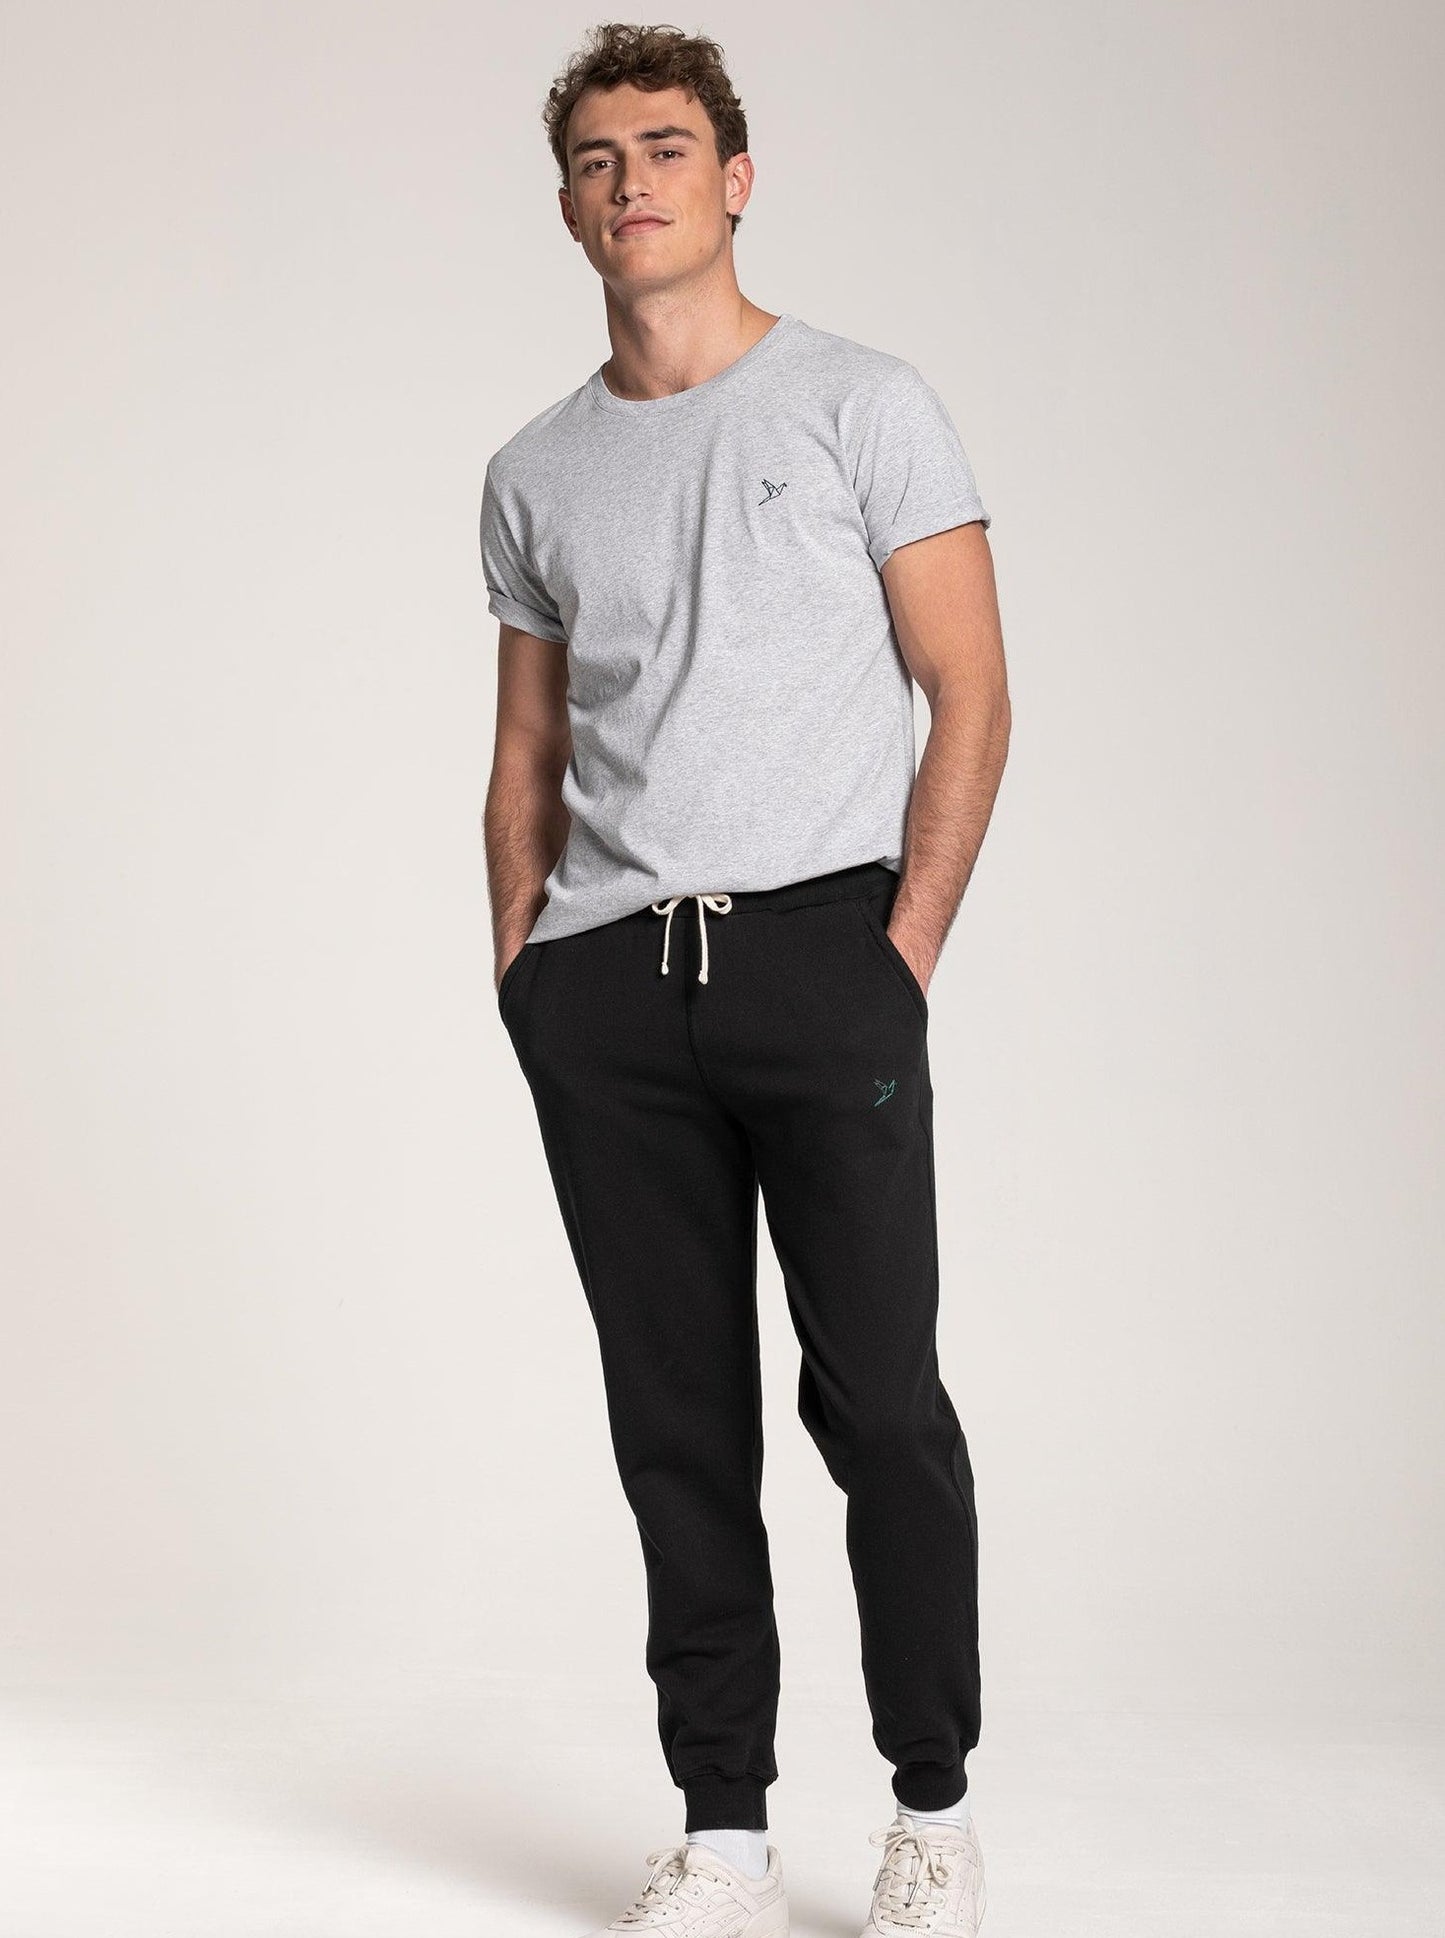 
                  
                    Men's Loose & Comfort Fit Sweatpants - Black - ORILABO Project
                  
                